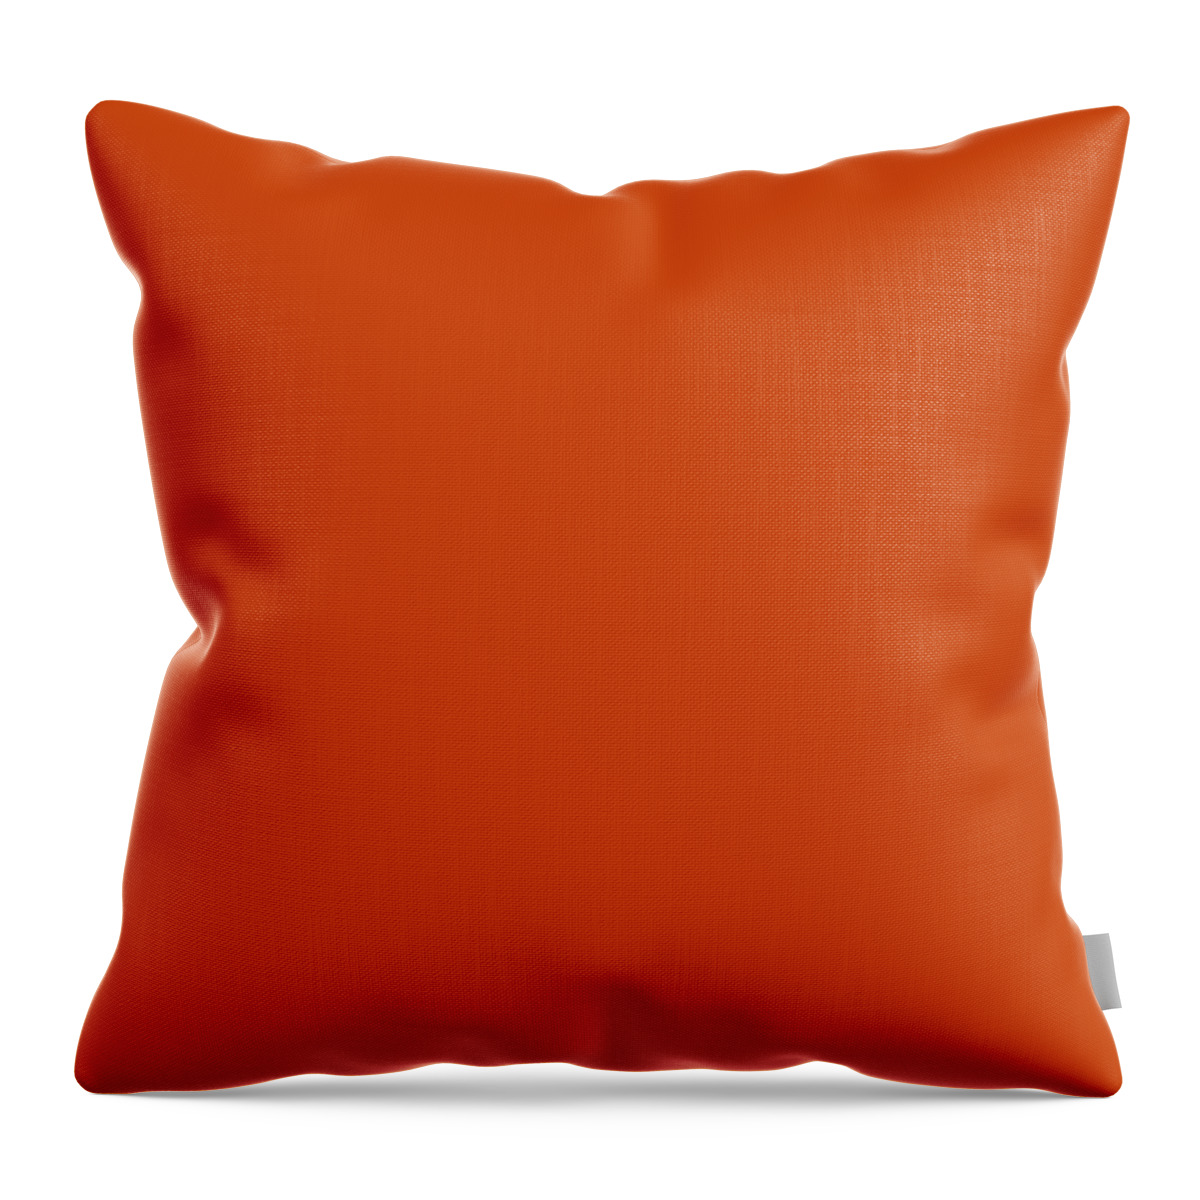 Mellow Mango Throw Pillow featuring the digital art Mellow Mango by TintoDesigns